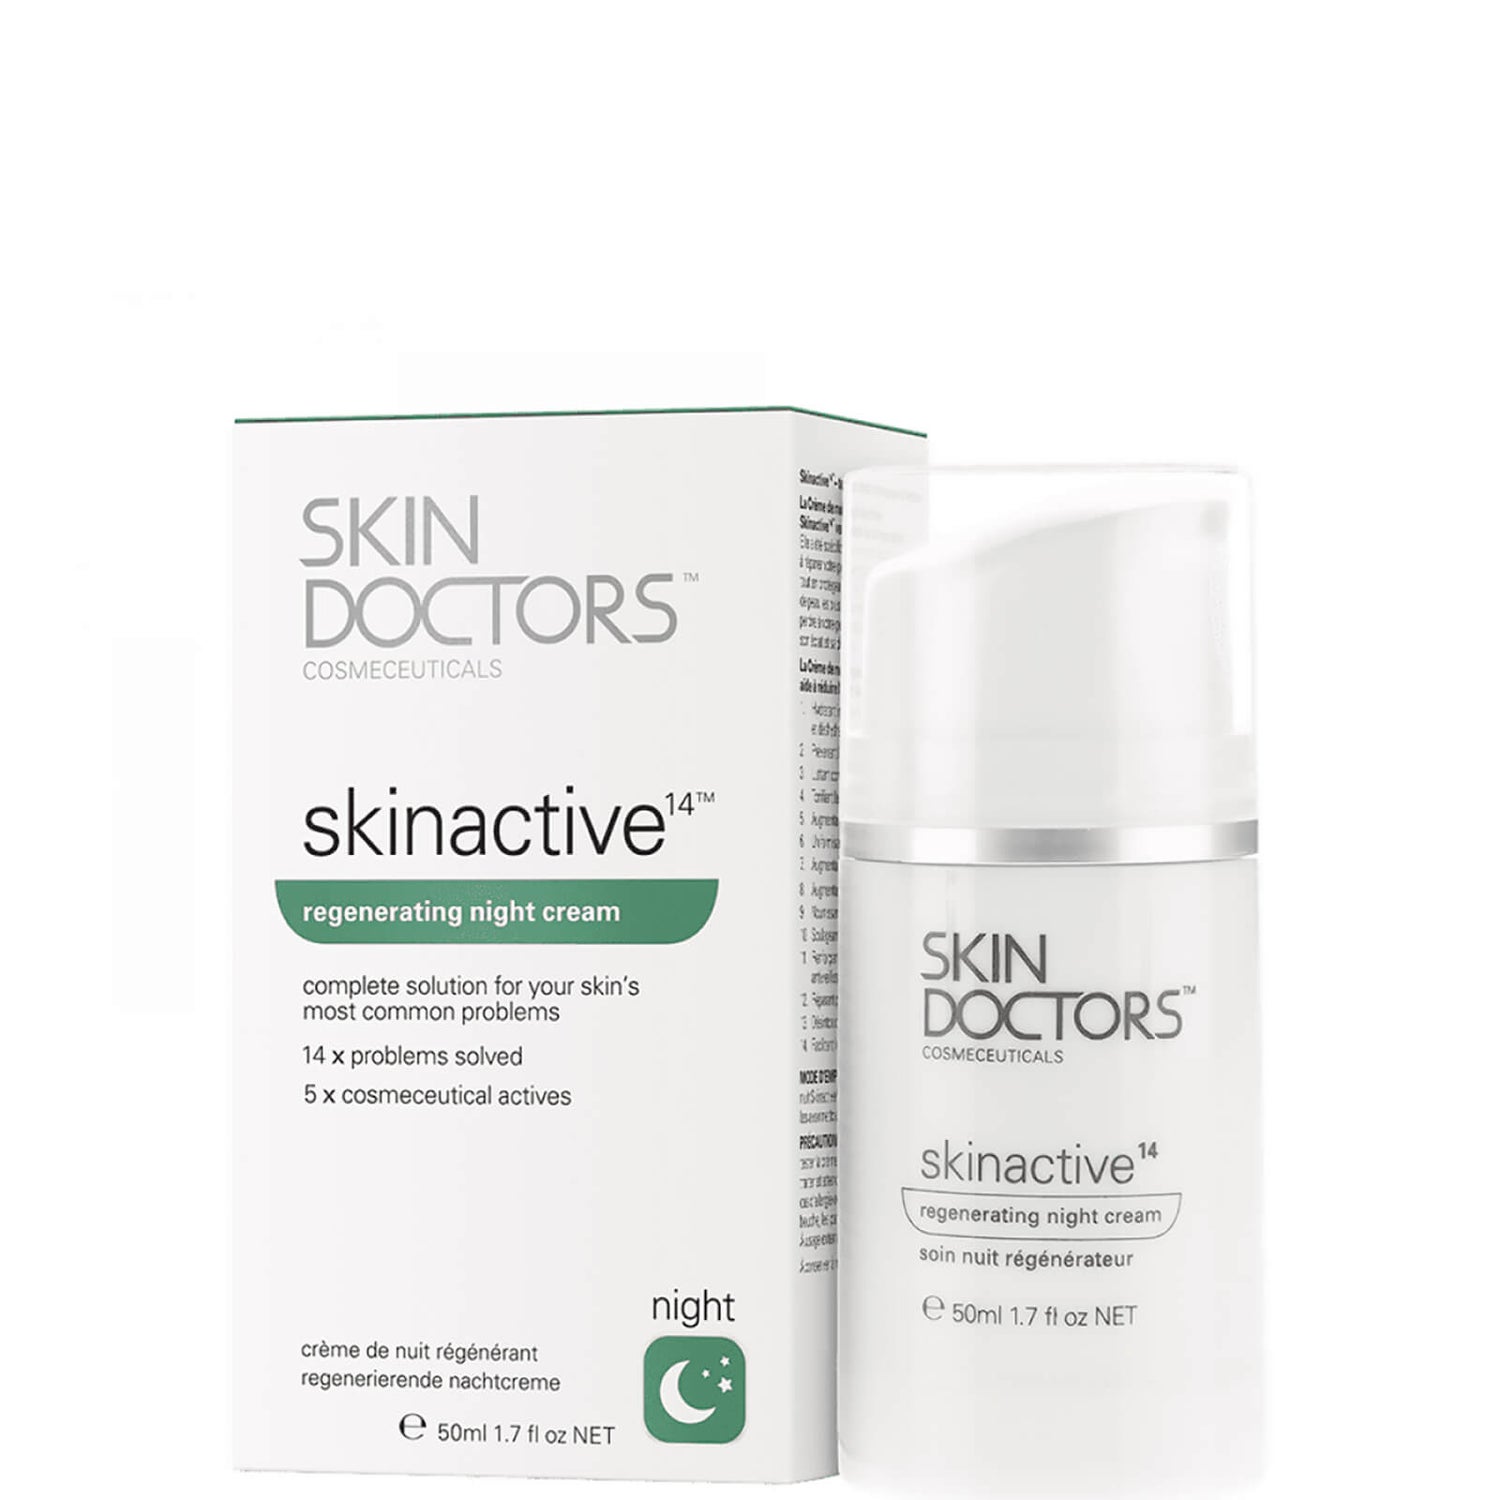 Skin Doctors Skinactive 14 Regenerating Night Cream (50 ml)